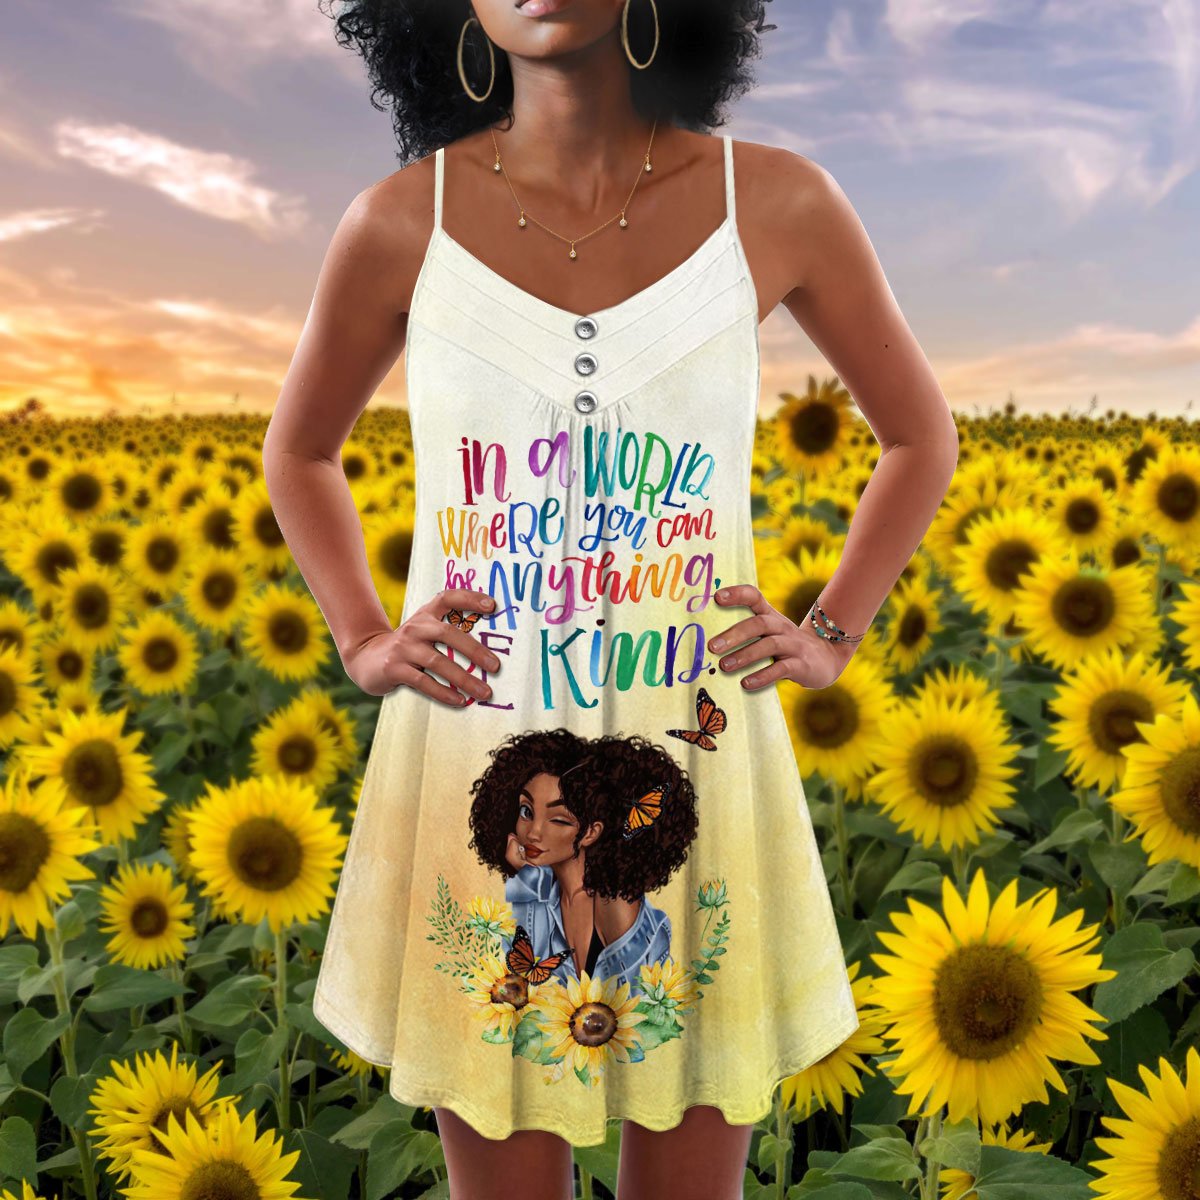 Black Women Be Kind - Summer Dress - Owls Matrix LTD